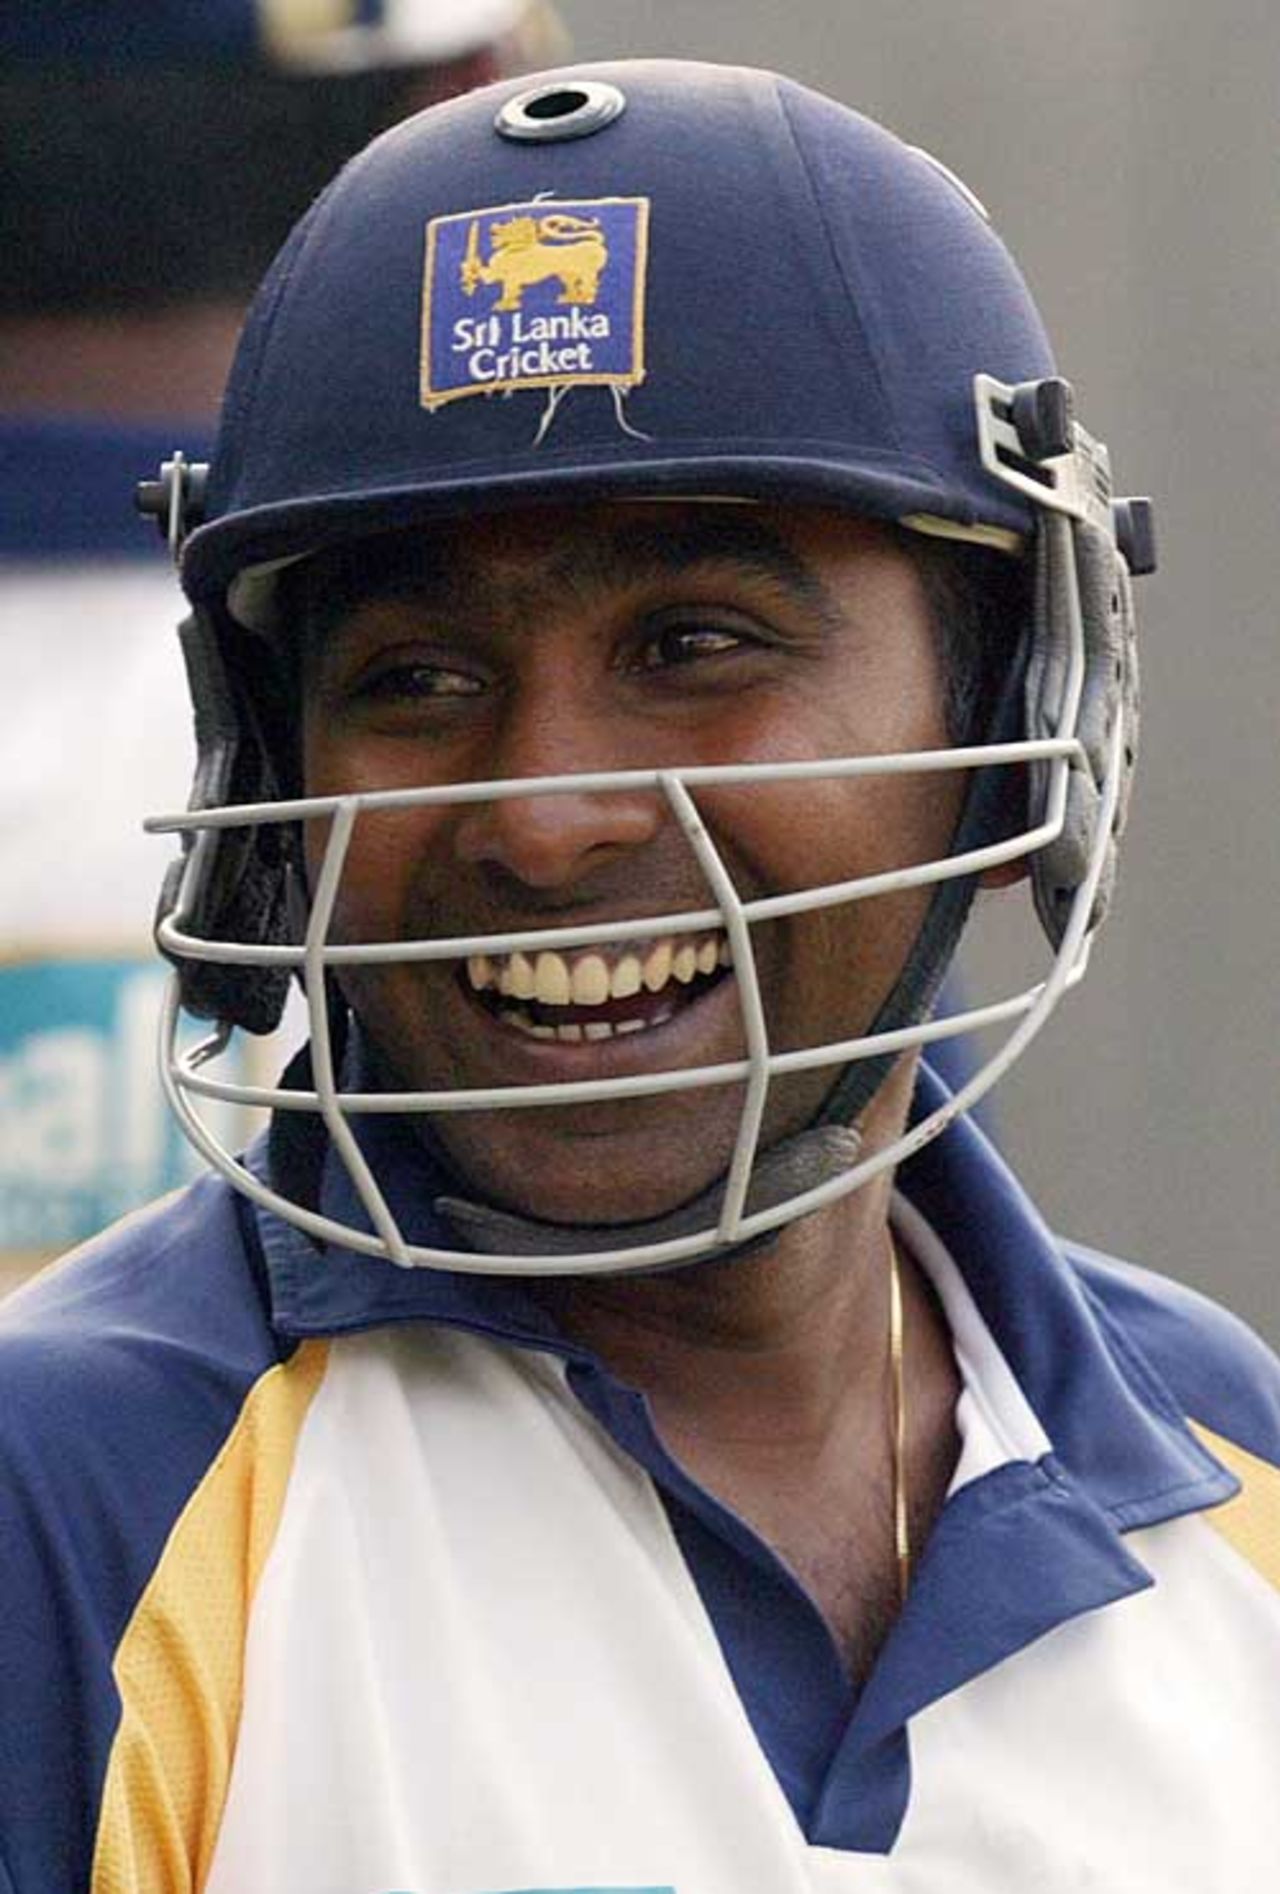 All smiles: Mahela Jayawardene during Sri Lanka's training session, Mohali, October 6, 2006